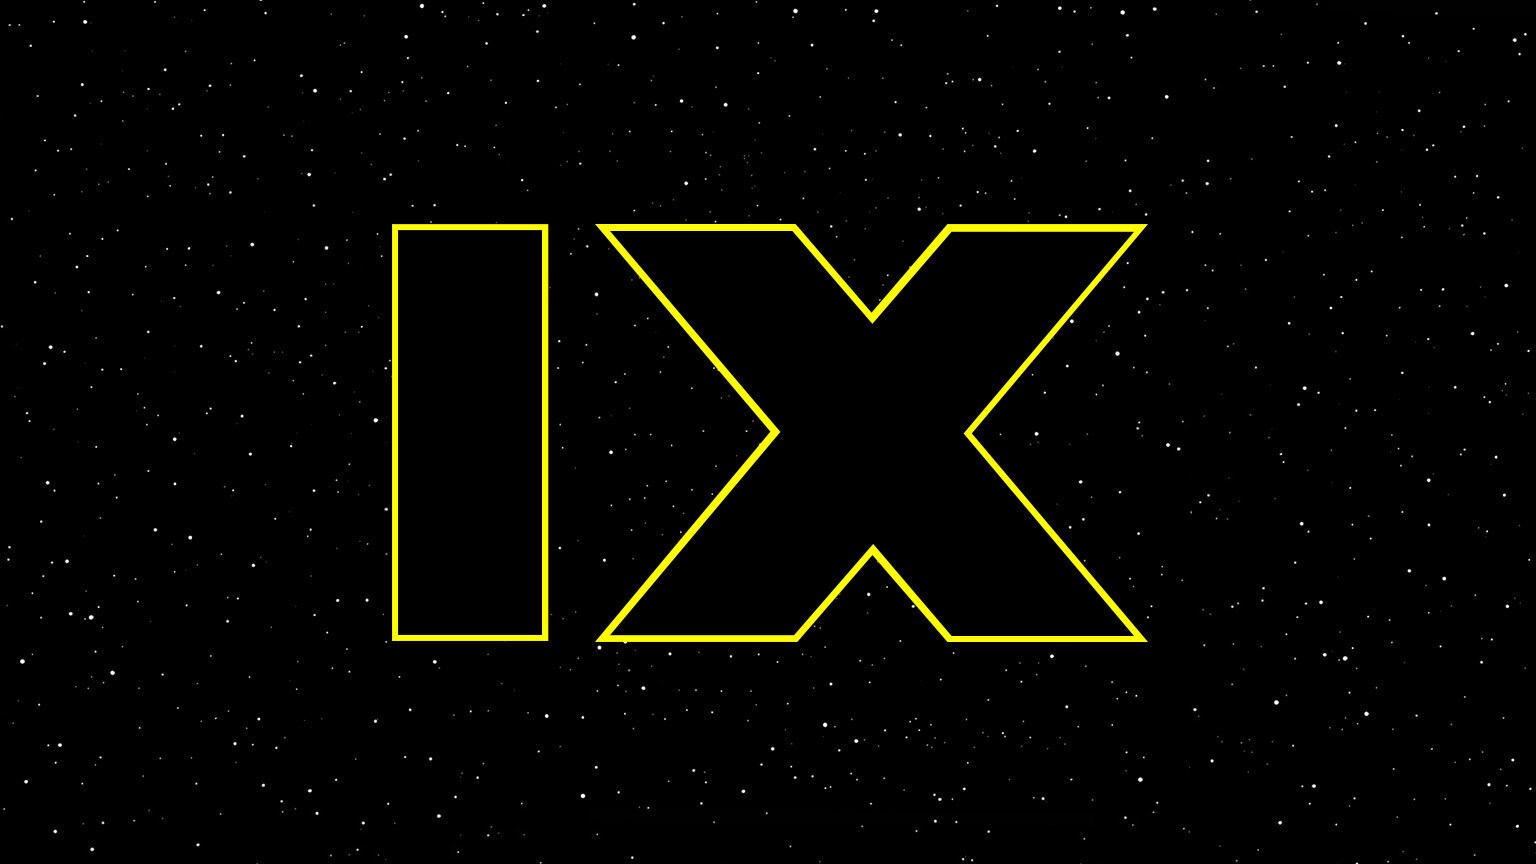 Star Wars: Episode IX Cast Announced